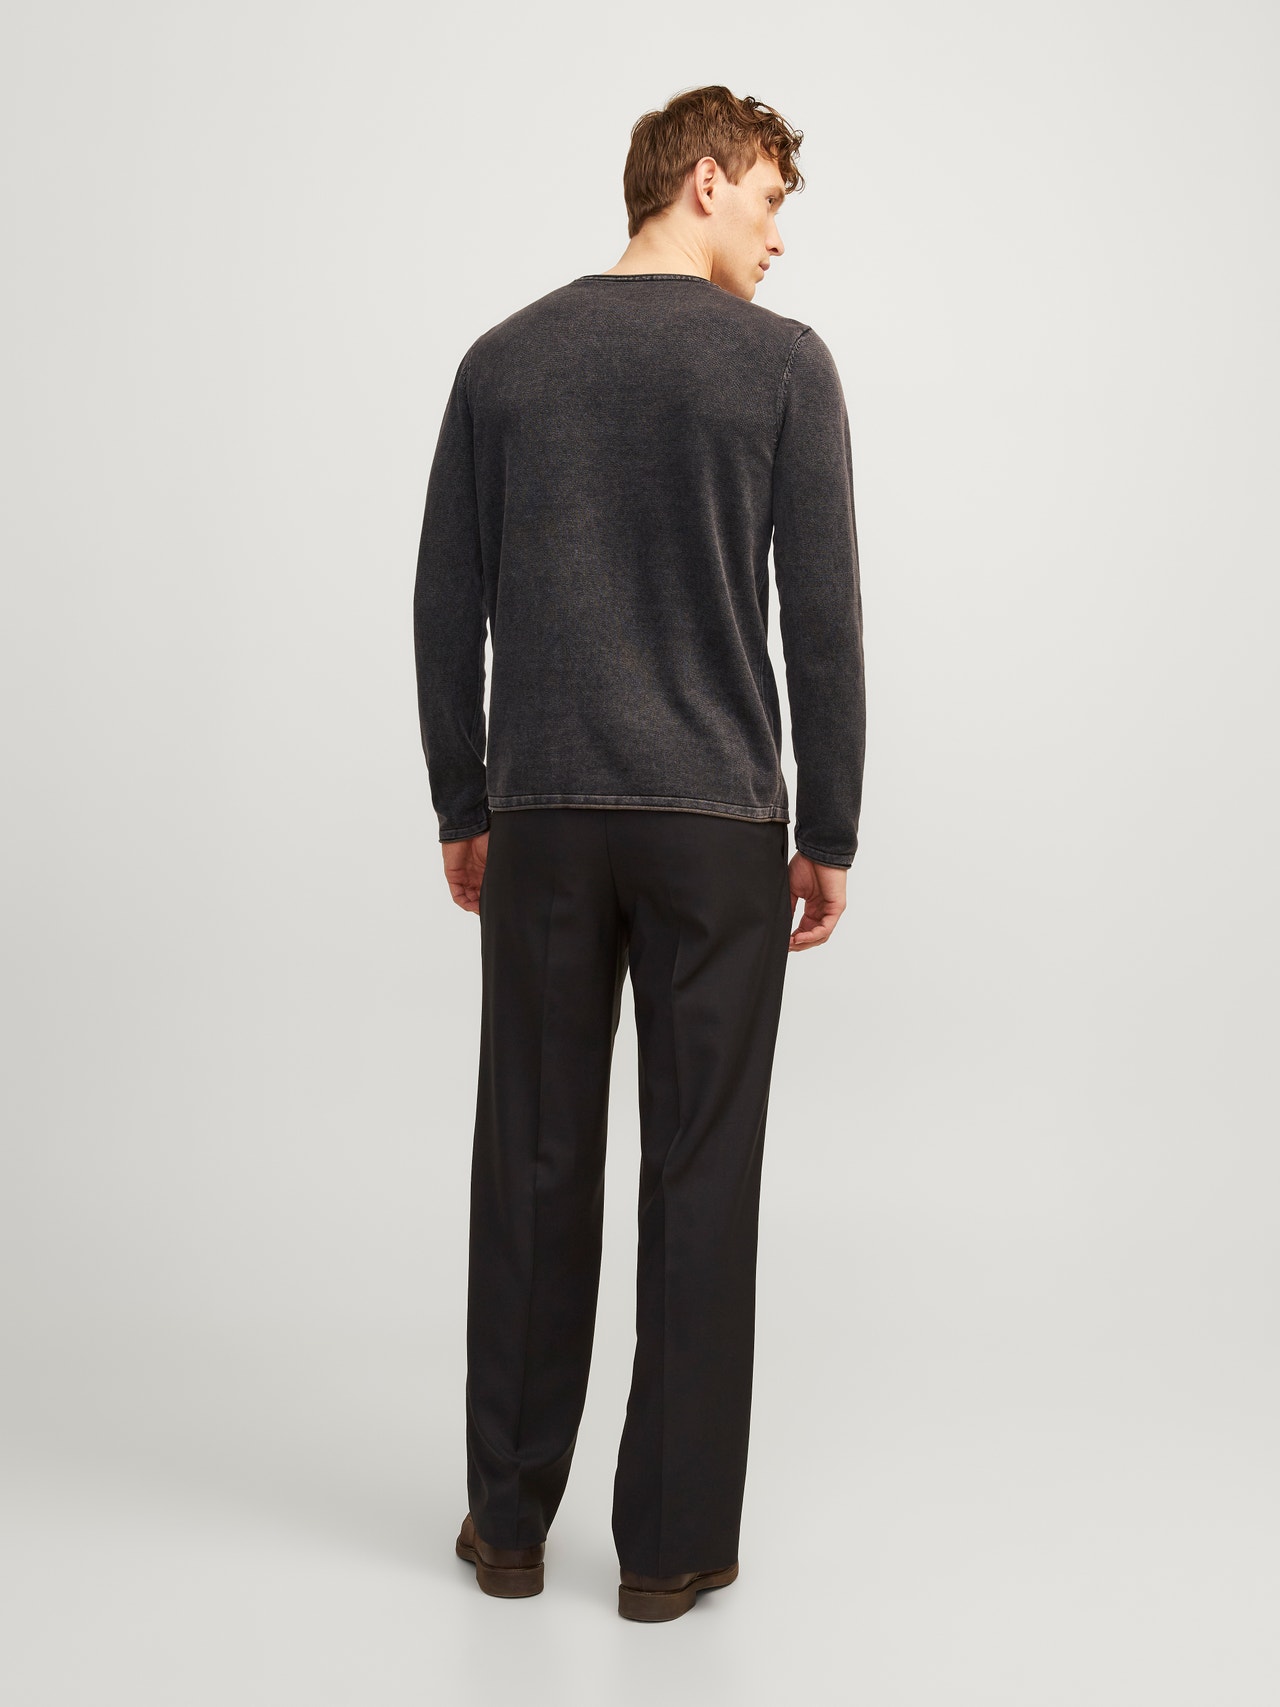 Jack & Jones Plain Knitted pullover -Caviar - 12174001